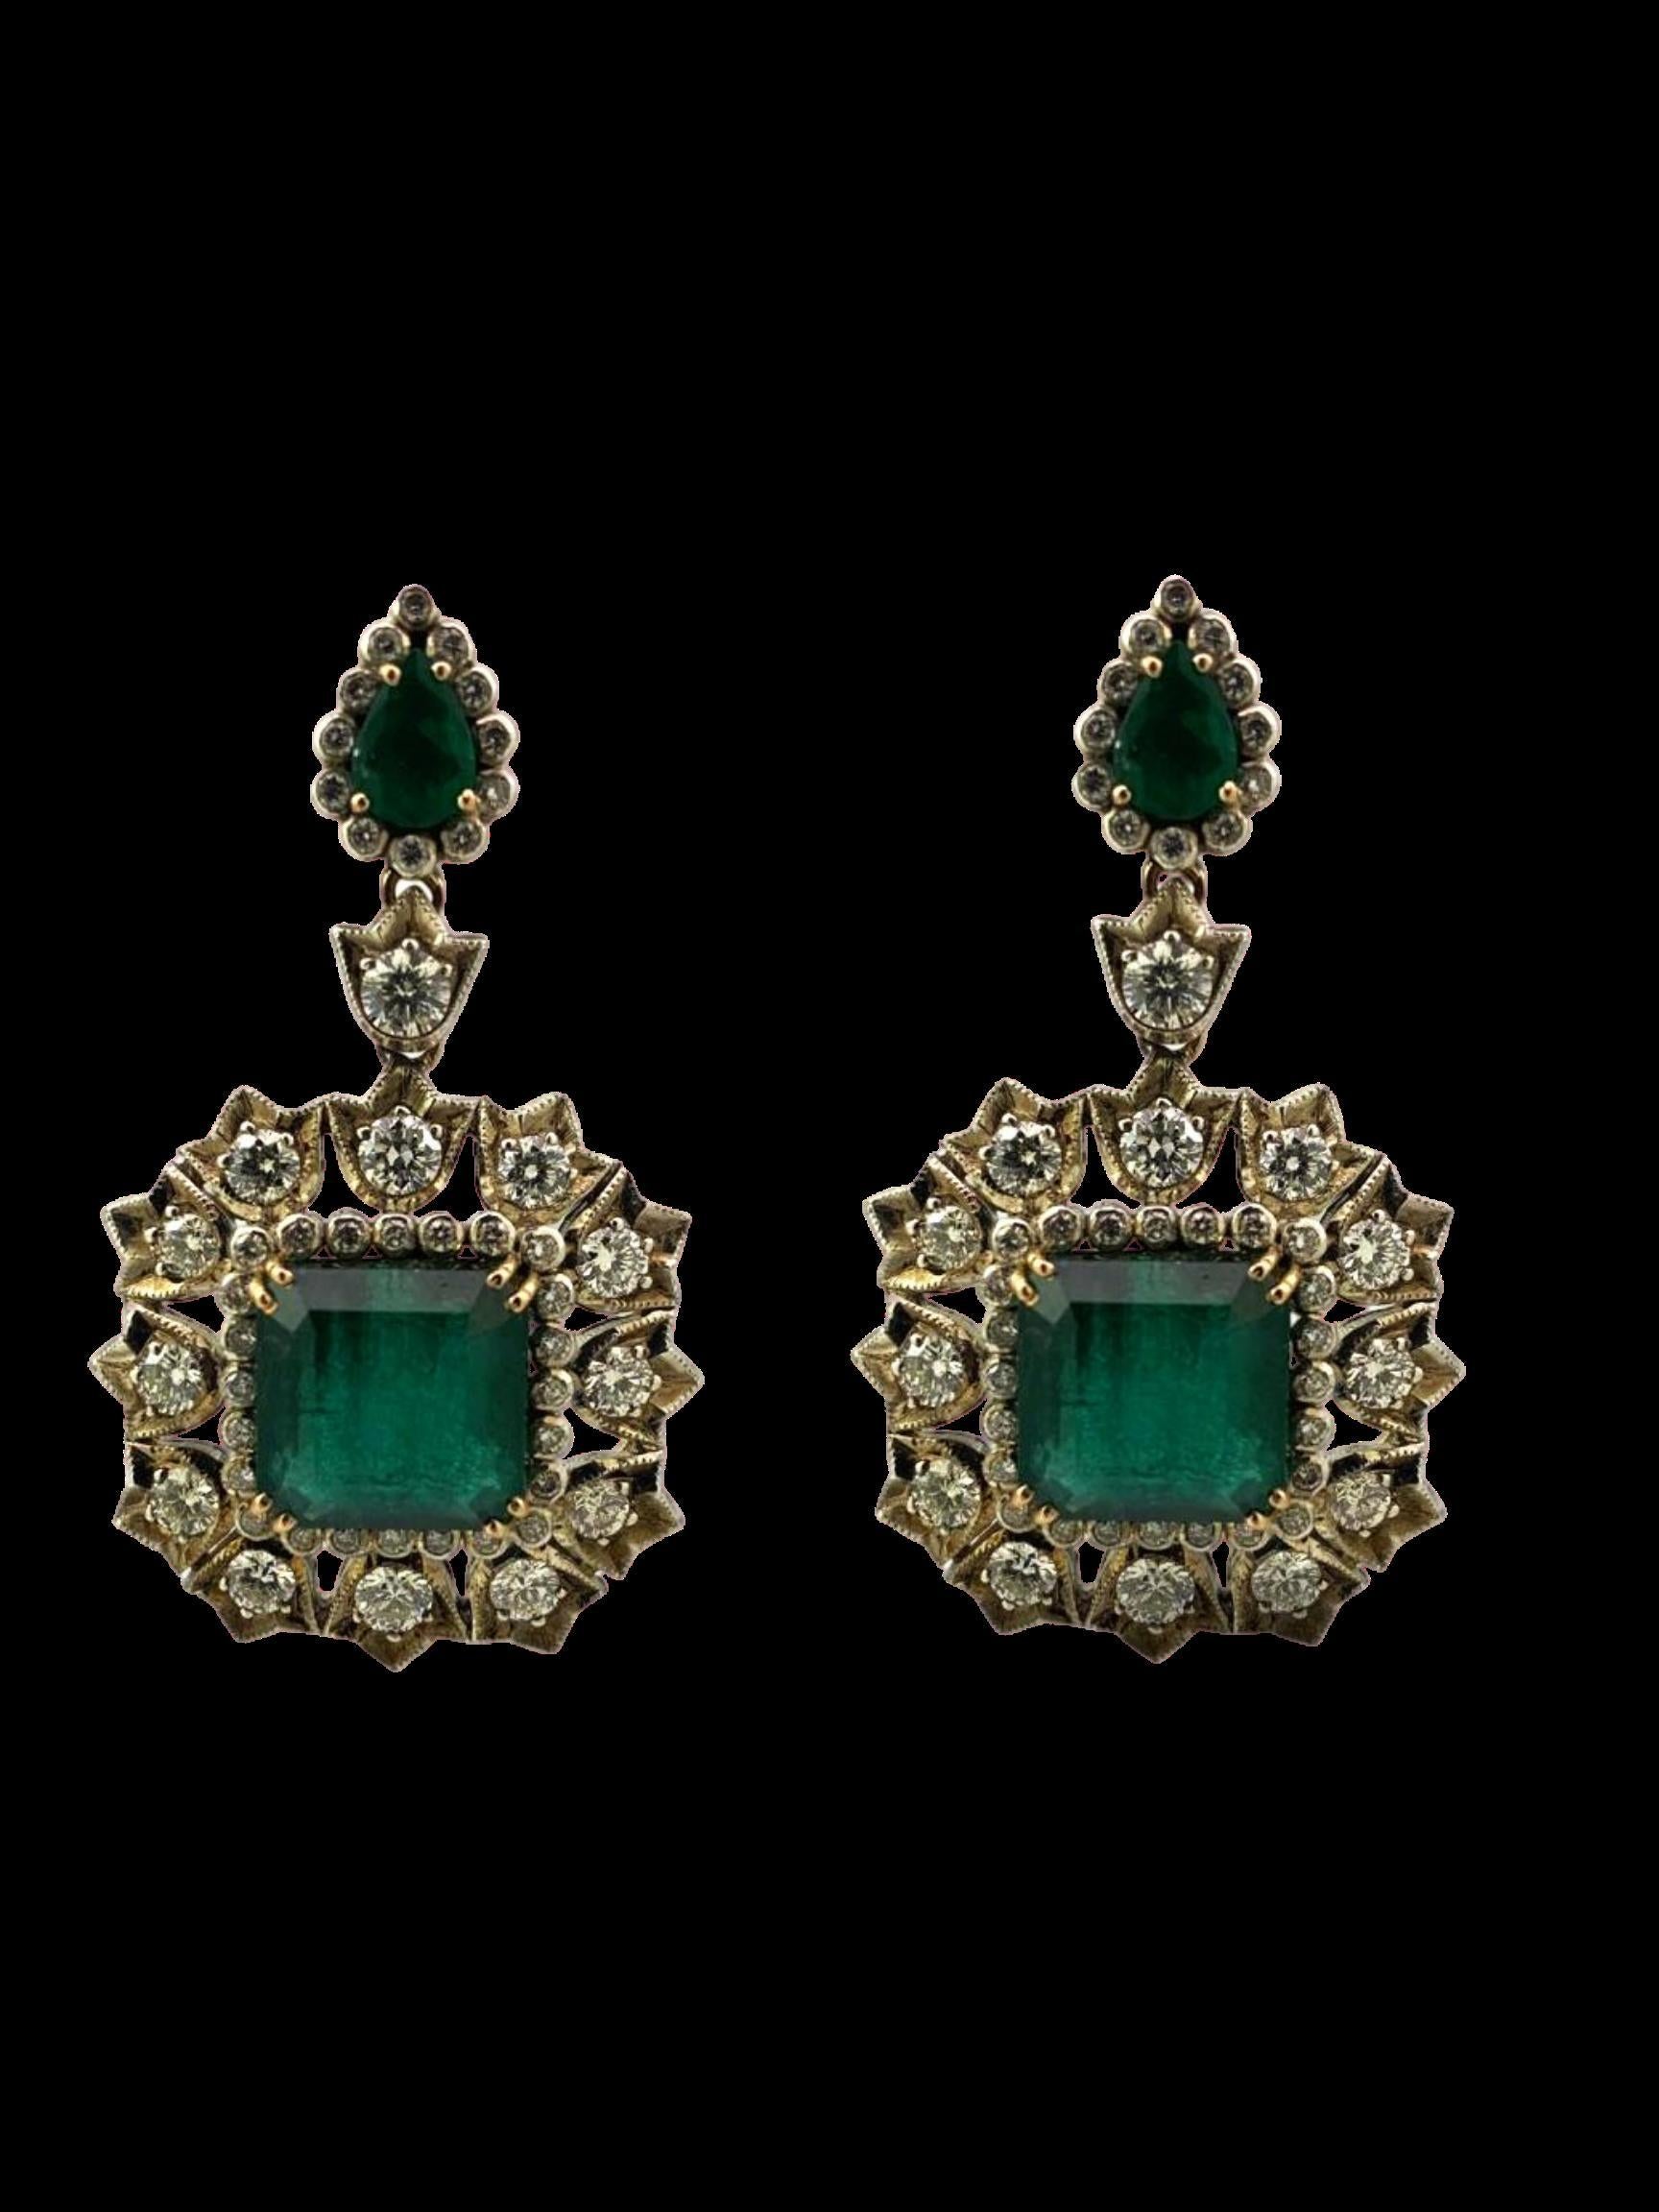 The York - 16.1 Carat Zambian Emerald and 5.4 Carat Diamond Earrings 18K Gold For Sale 6